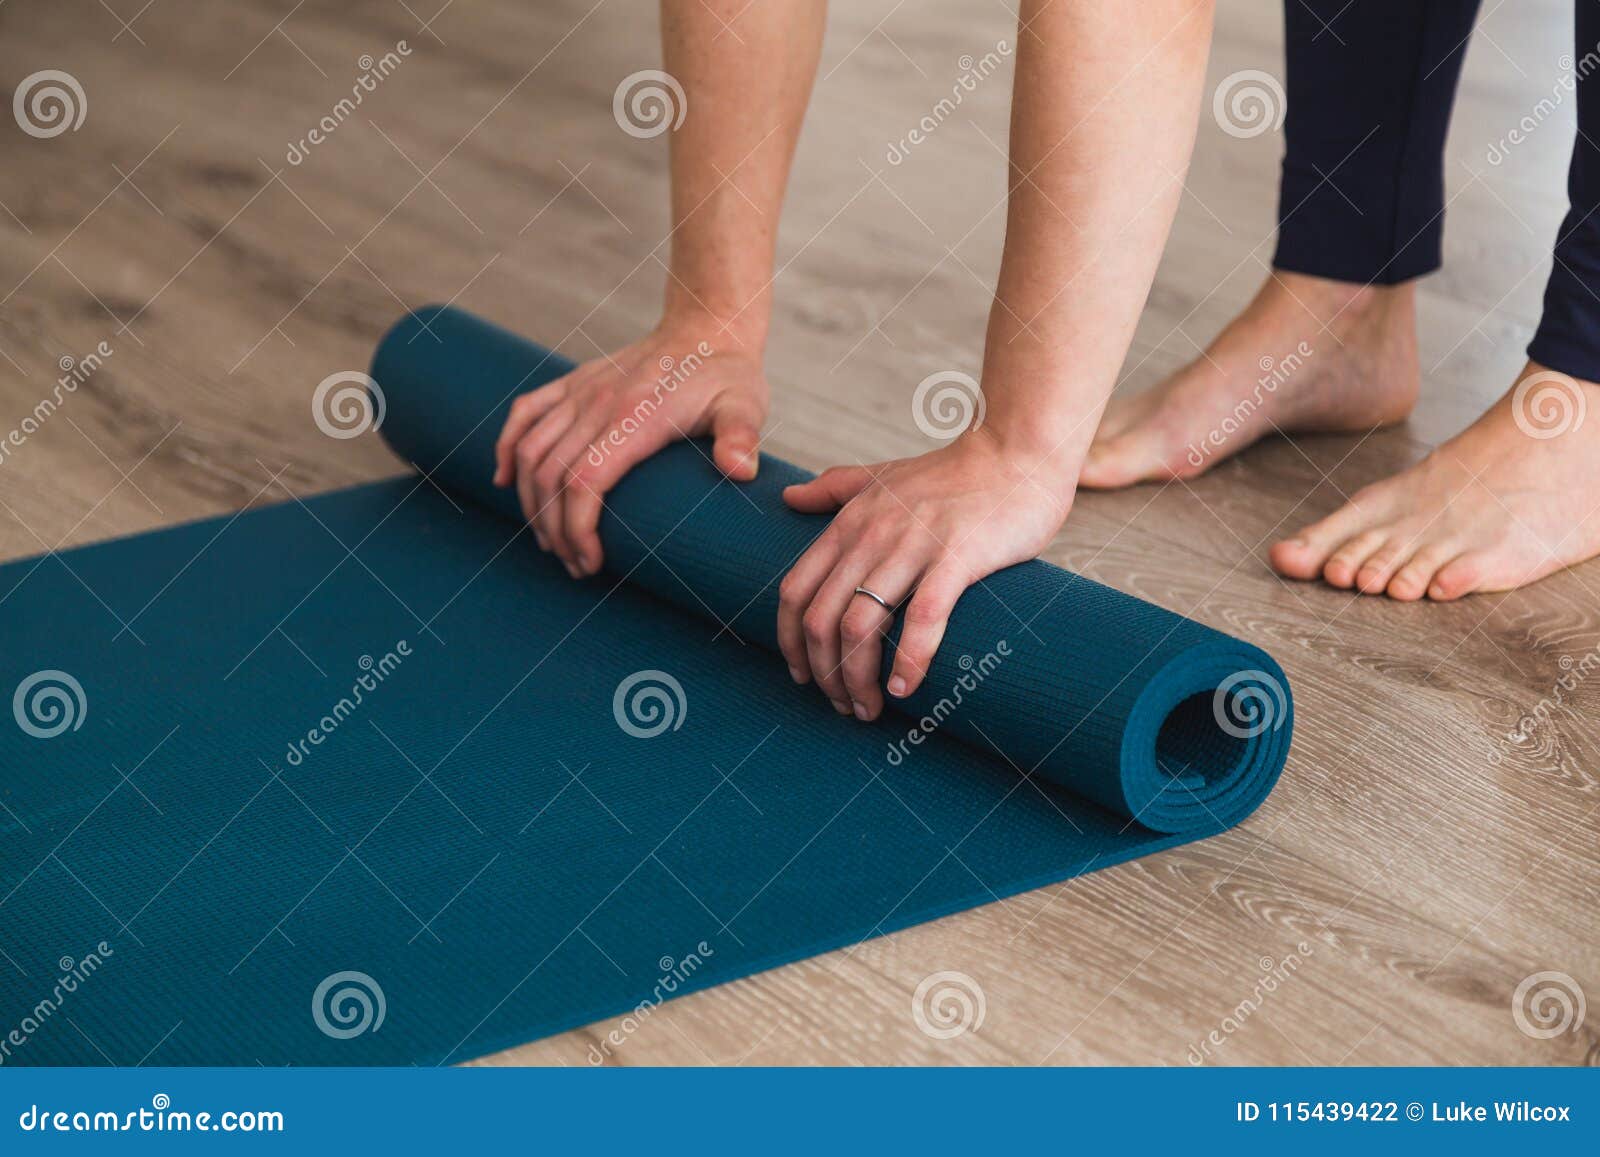 woman unrolling her yoga mat in a studio